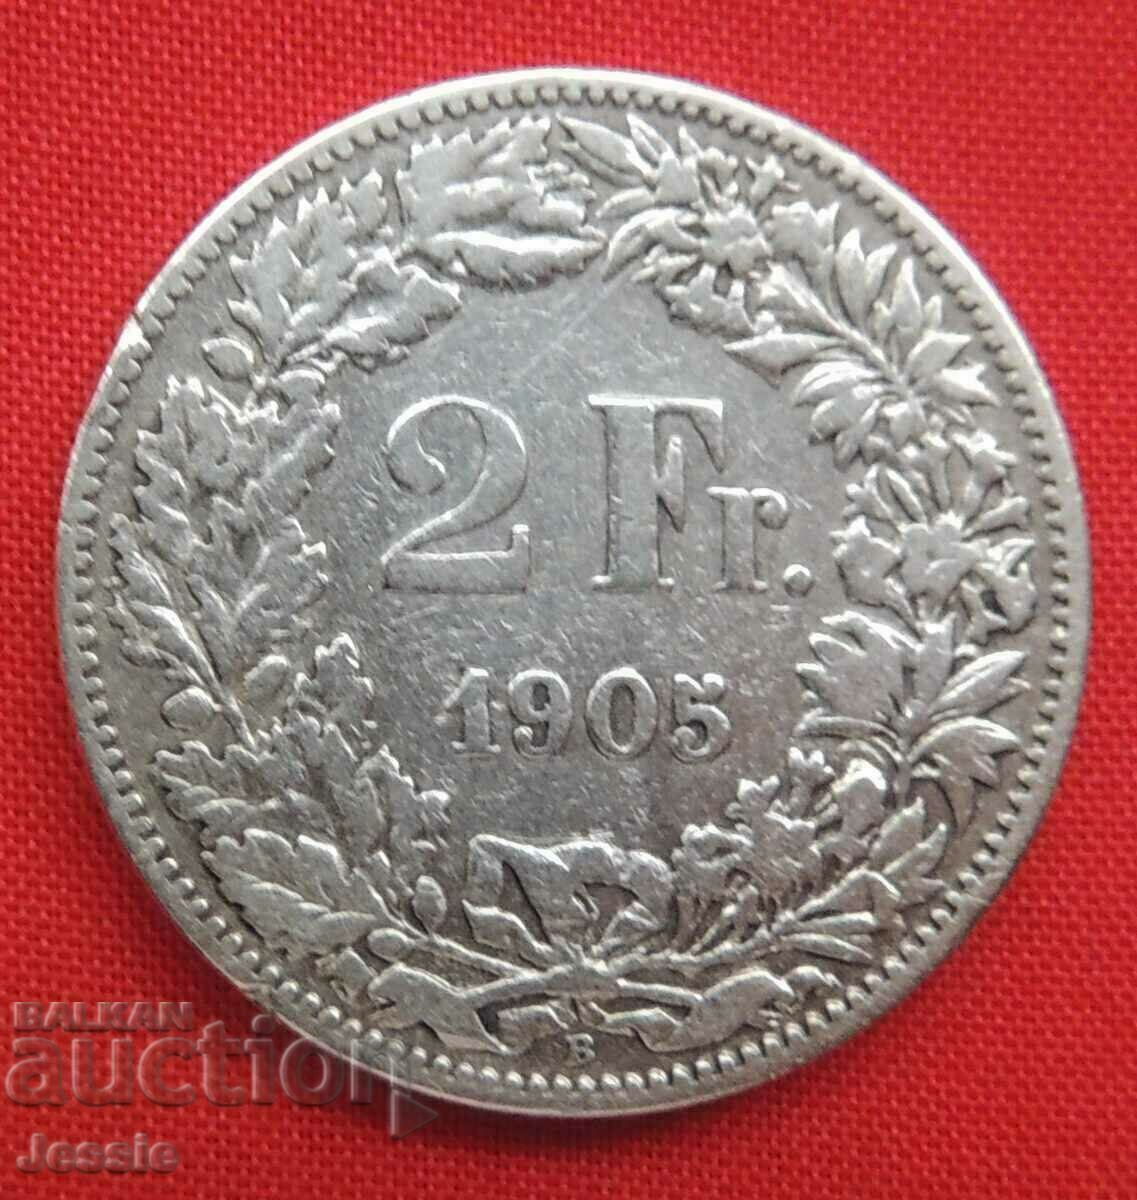 2 Francs 1905 B Switzerland Silver